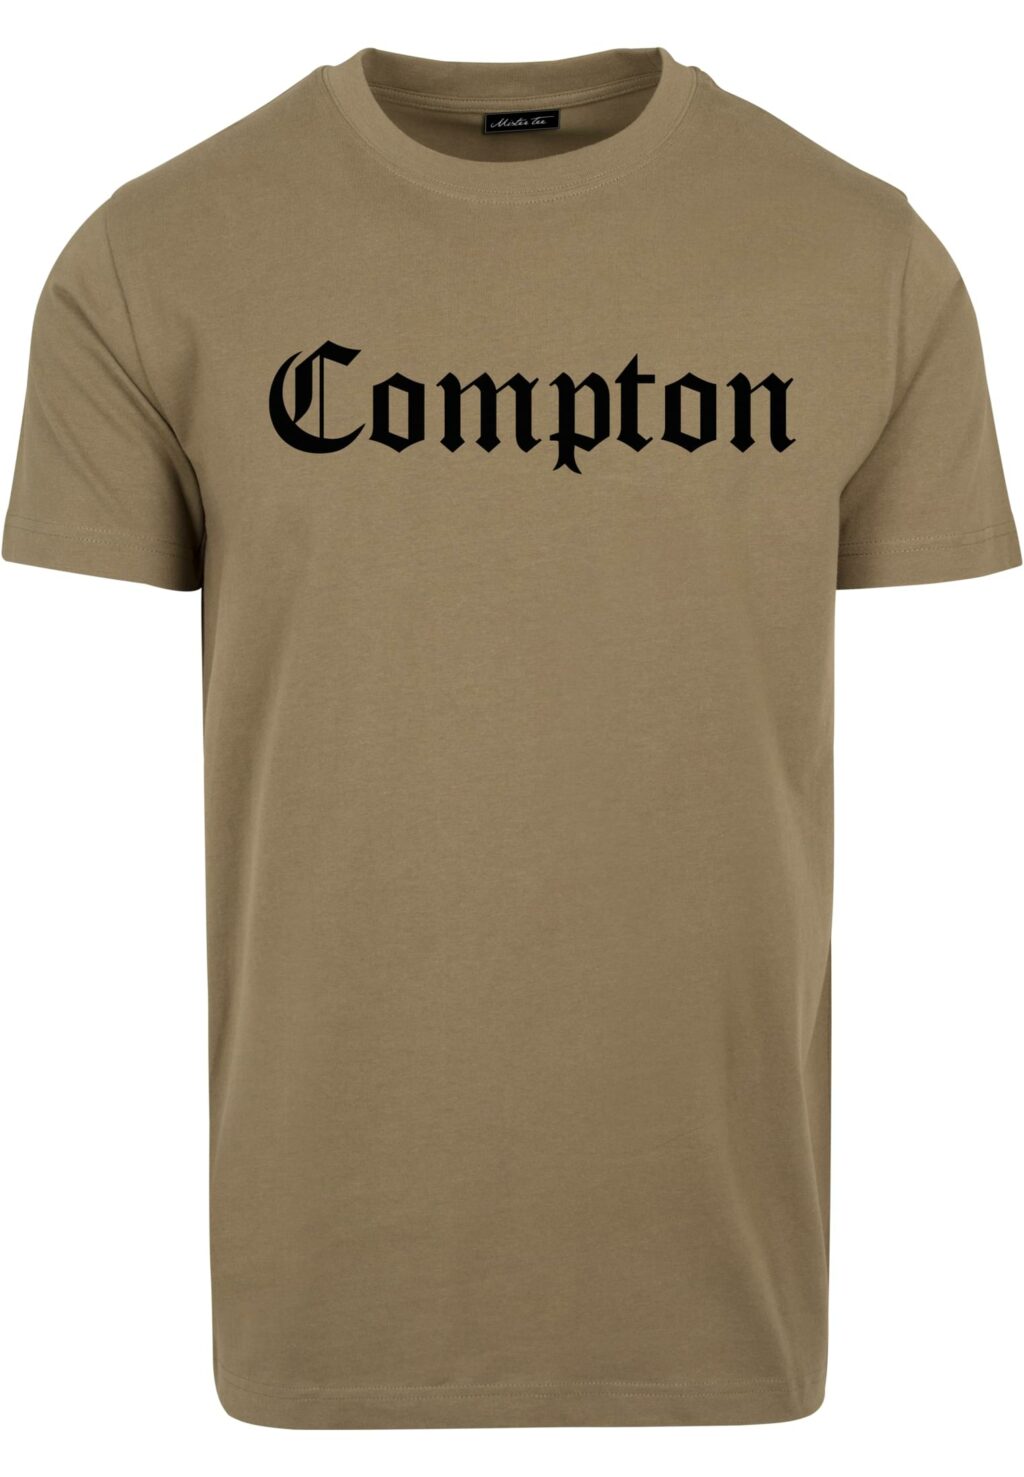 Compton Tee olive MT268